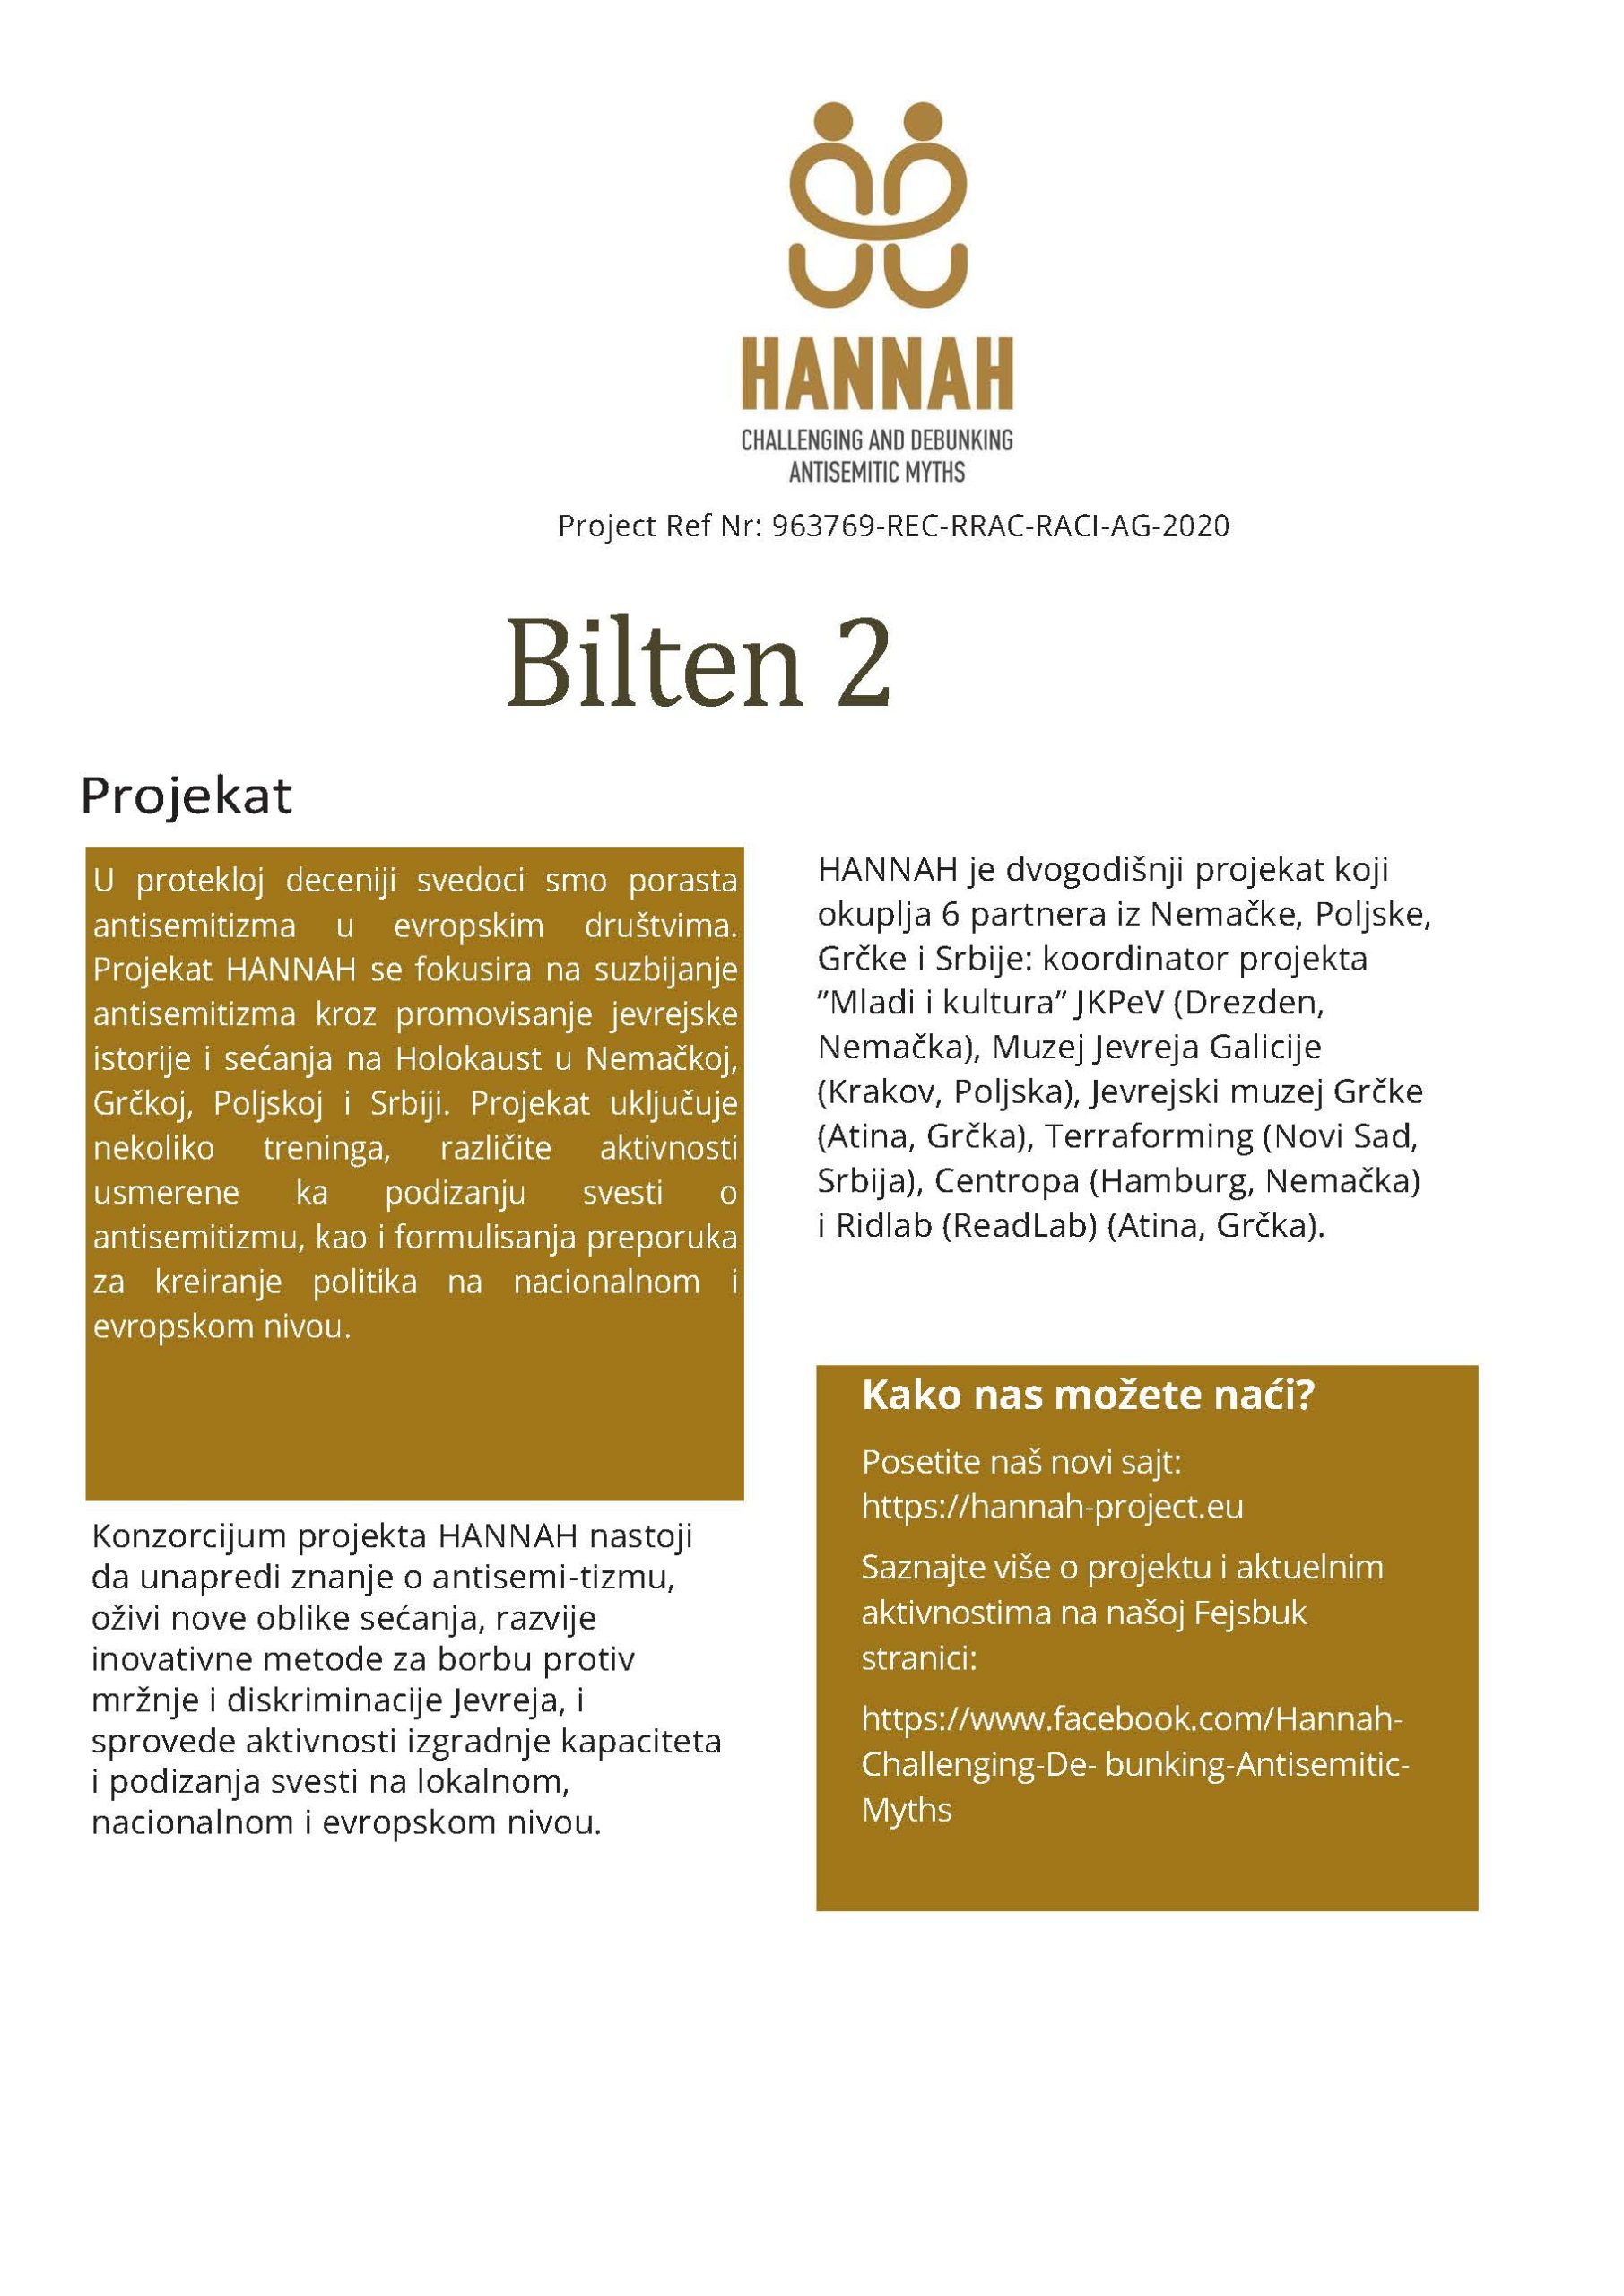 NEW_Hannah_Newsletter 2_EN_Page_1